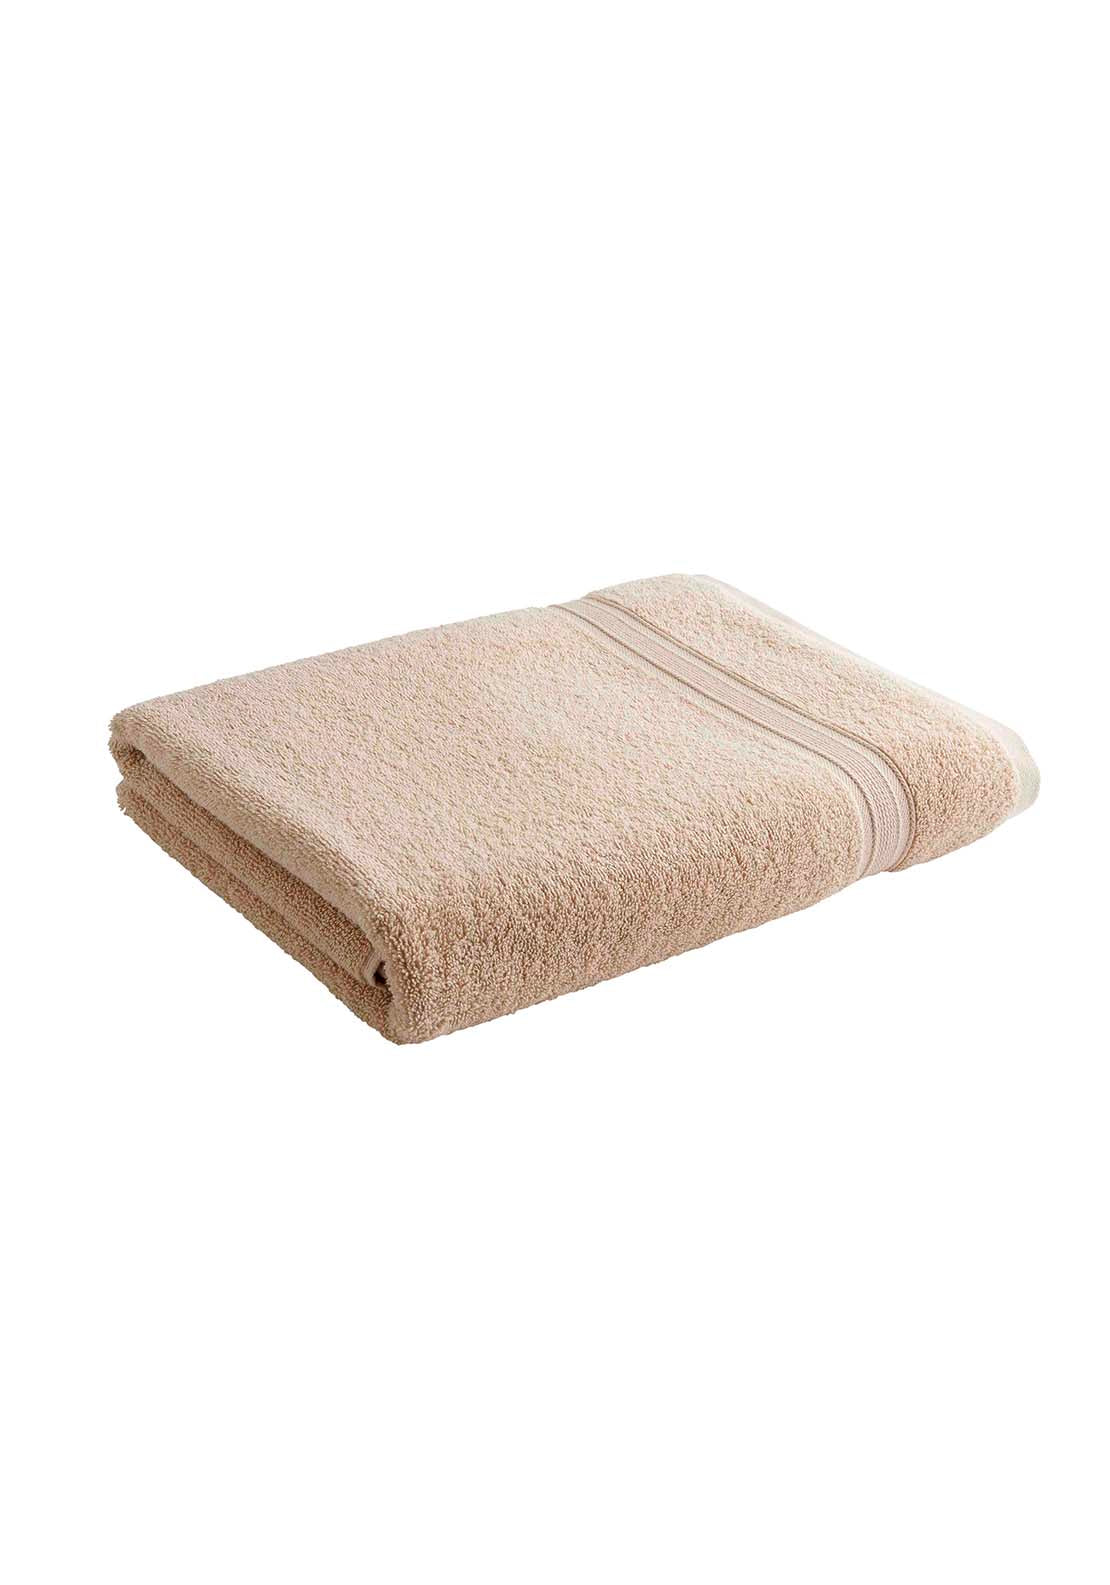 Christy Serene Bath Towel - Driftwood 1 Shaws Department Stores